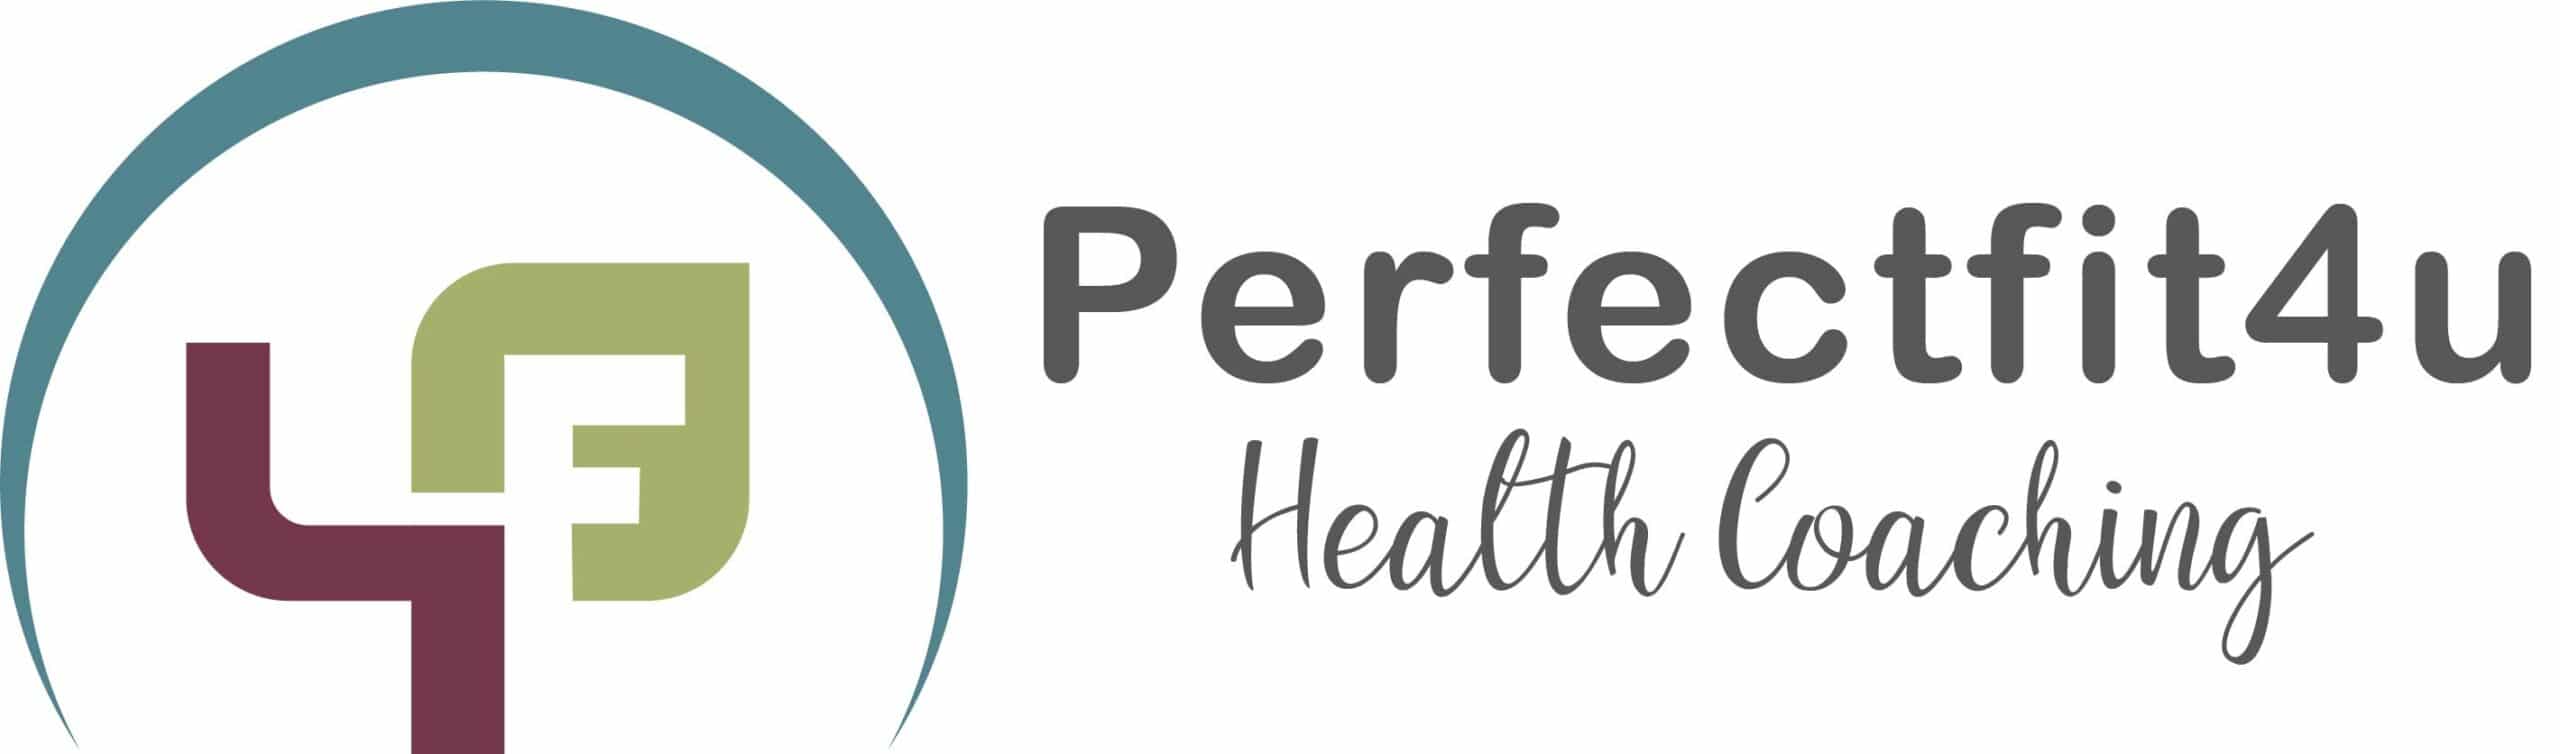 Virtual Health and Wellness Coaching | #Perfectfit4u | Nutrition ...